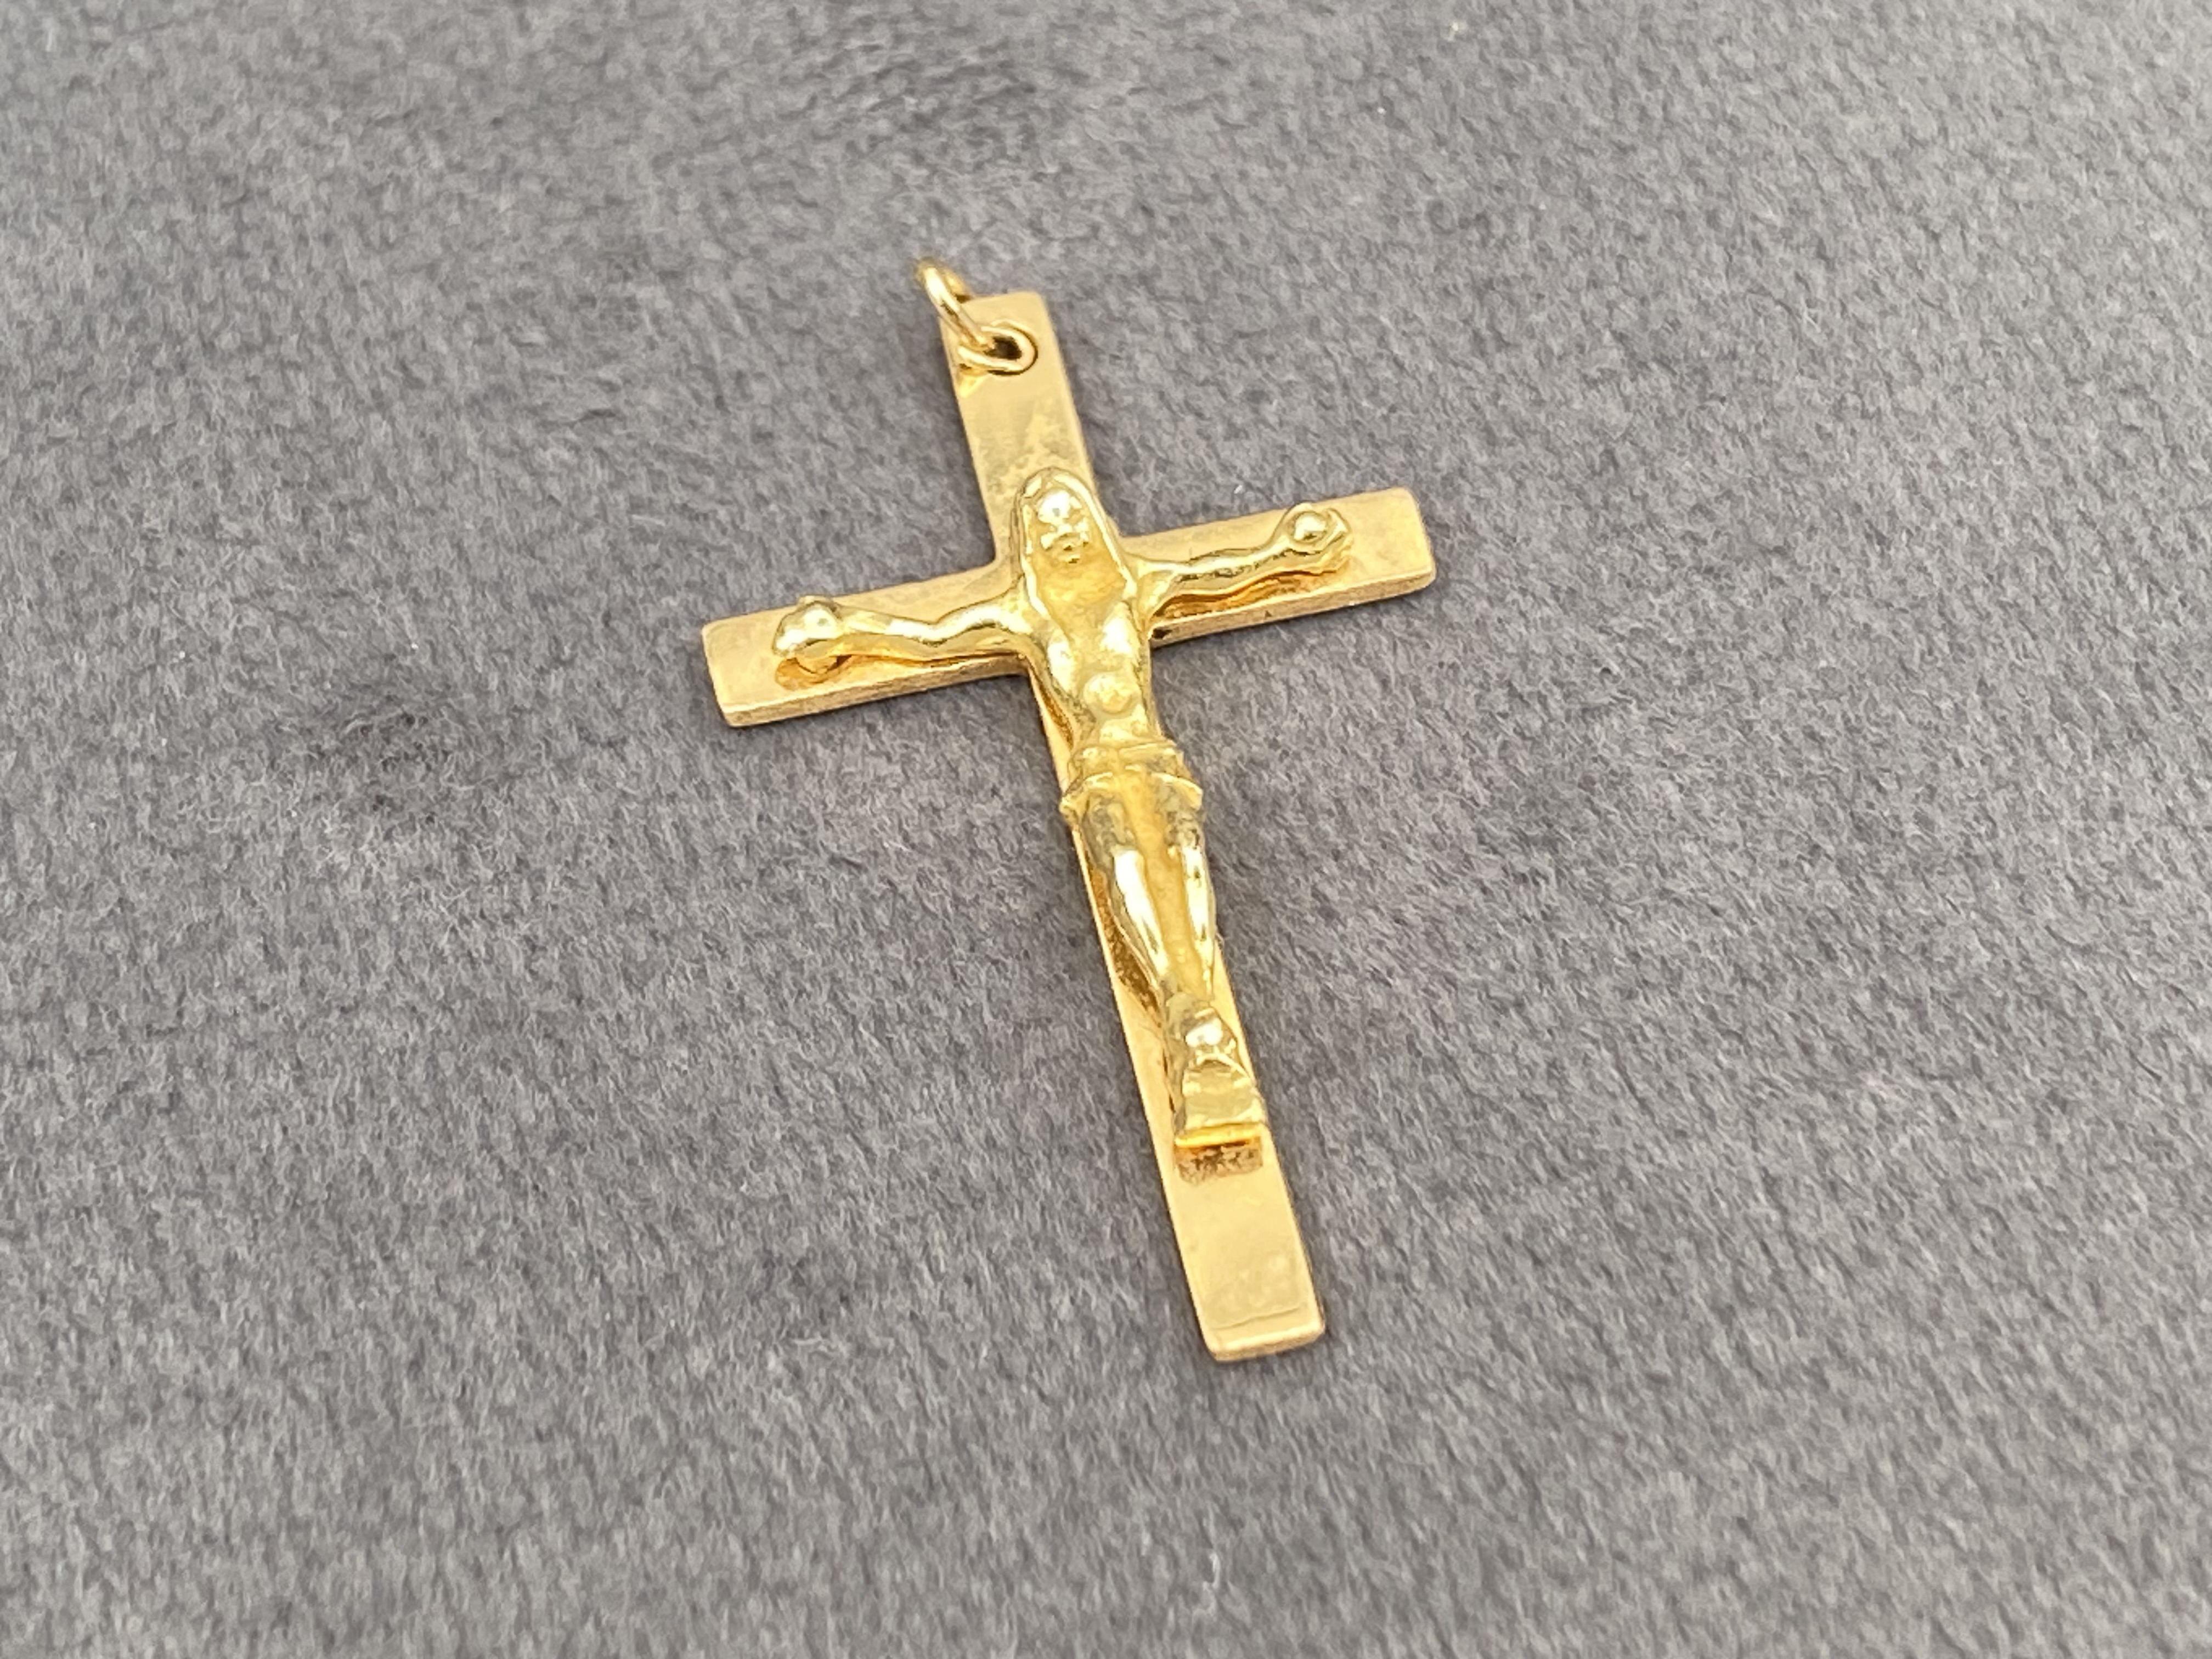 18ct gold crucifix pendant weighing 2.08 grams